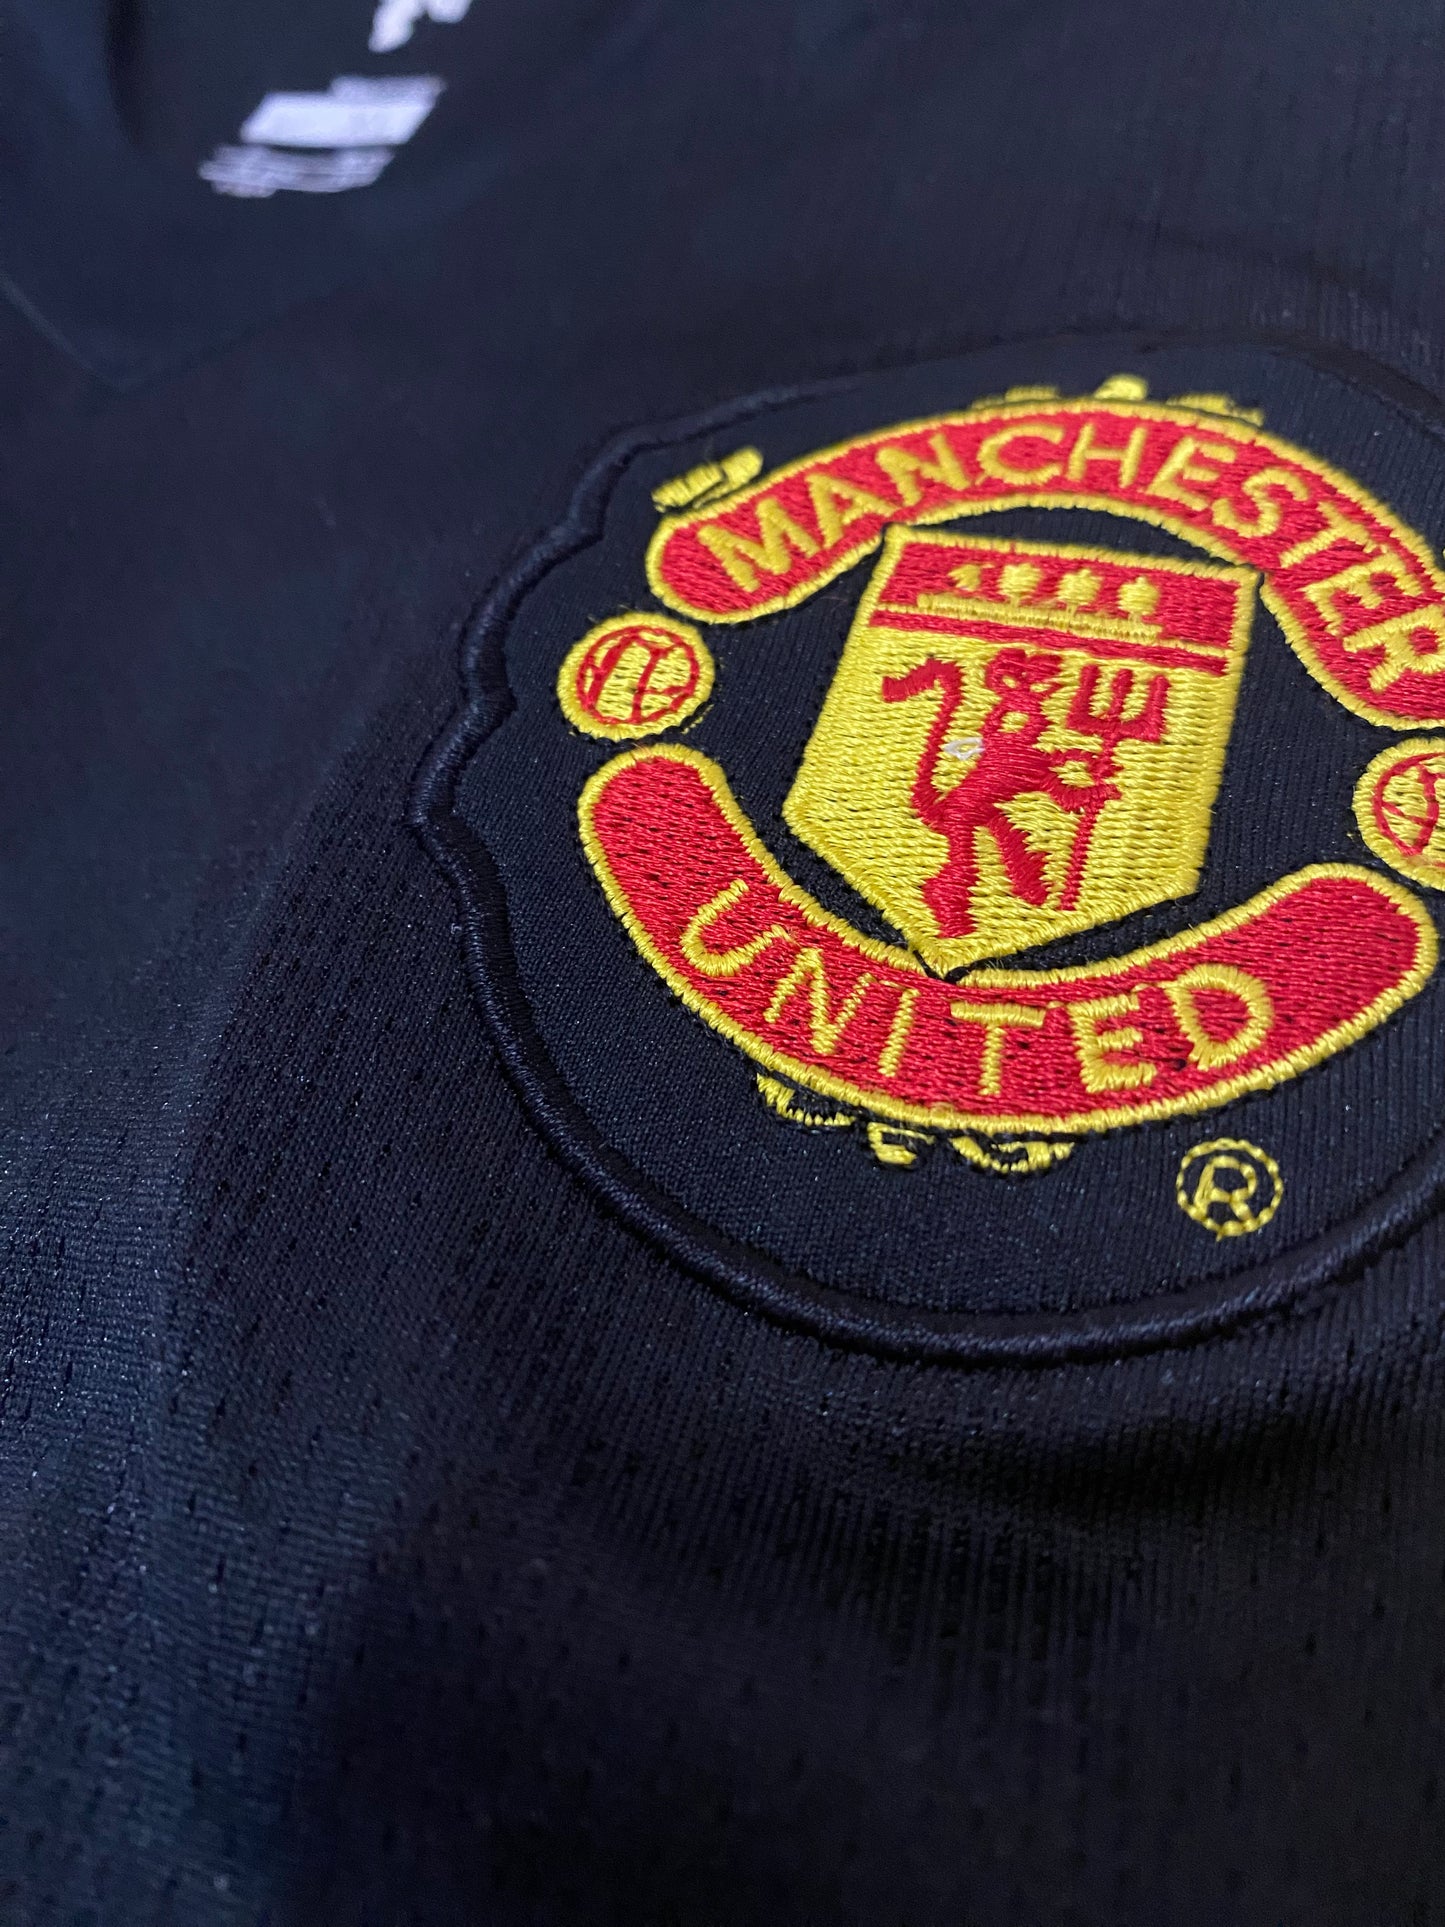 Manchester United 2007-2008 ''Rooney'' away shirt